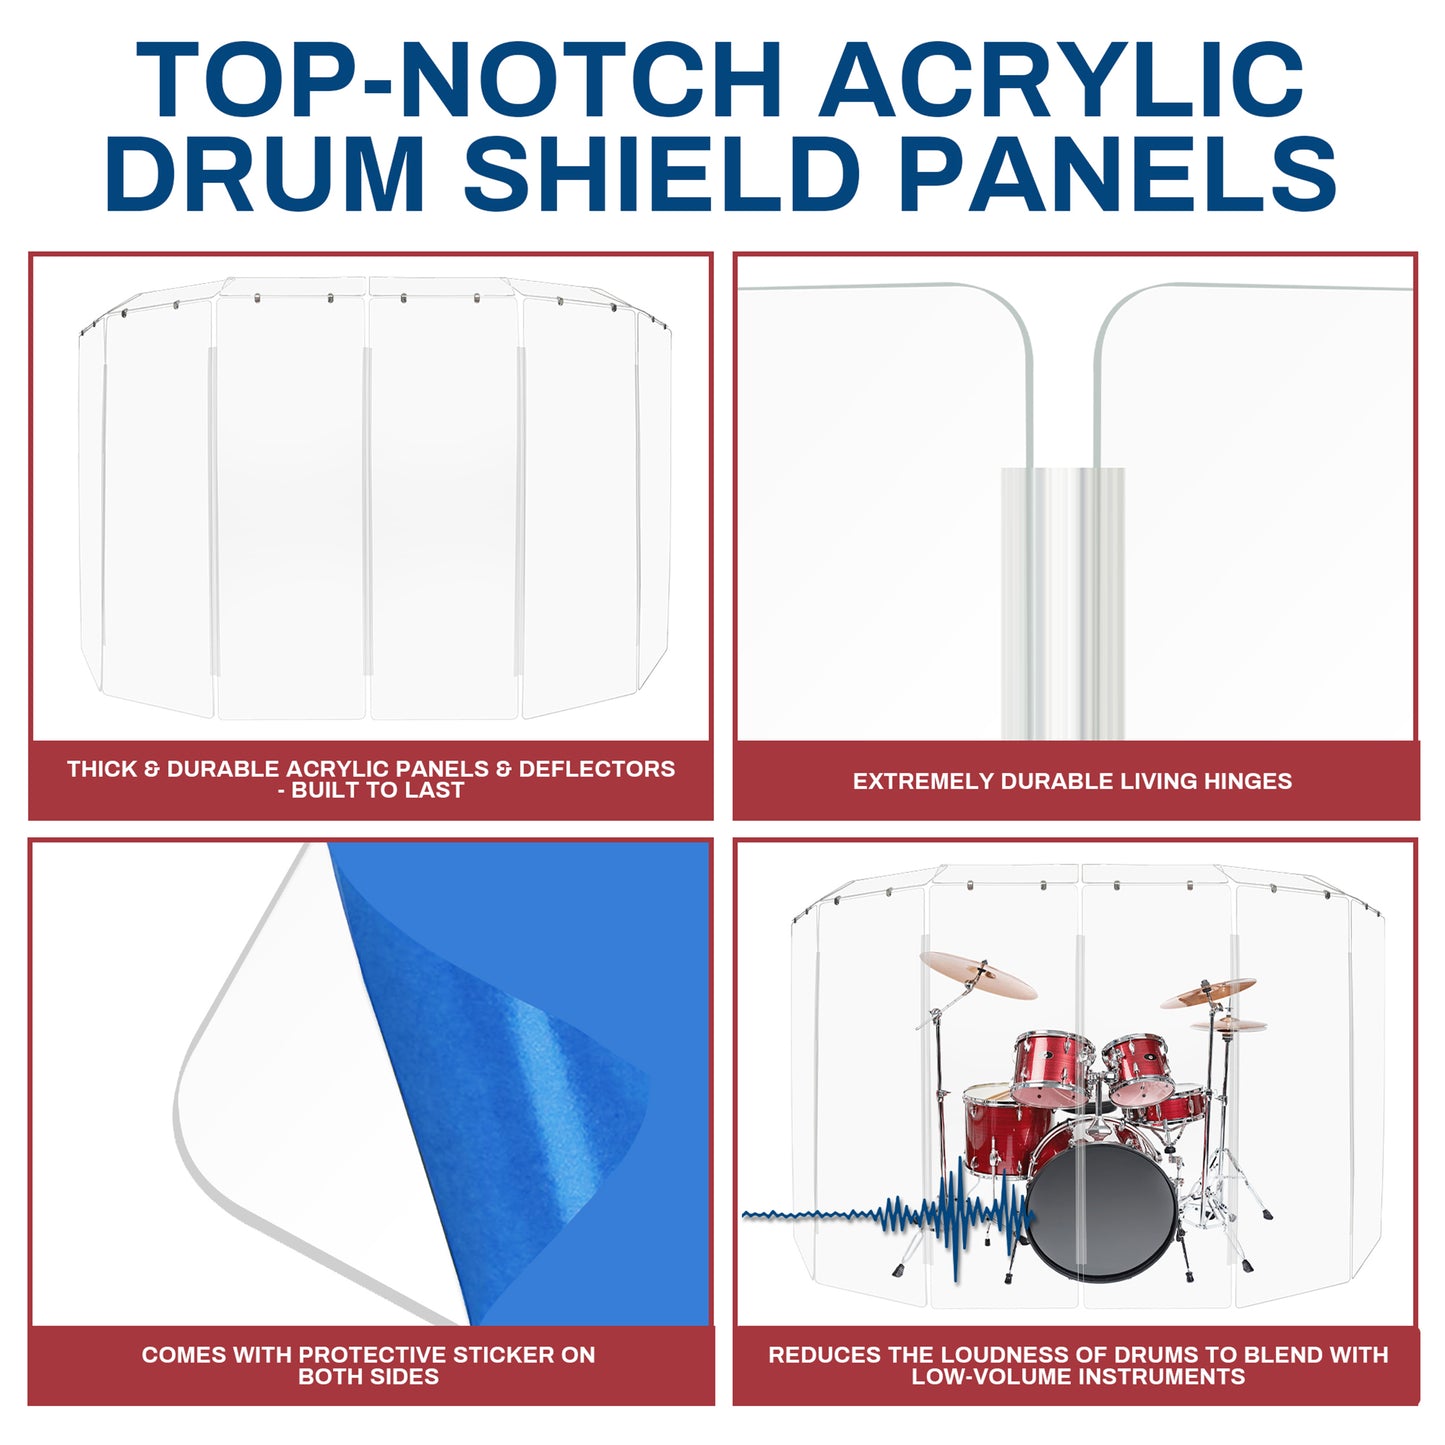 Drum Shield 2ft. x 6 ft. Panels